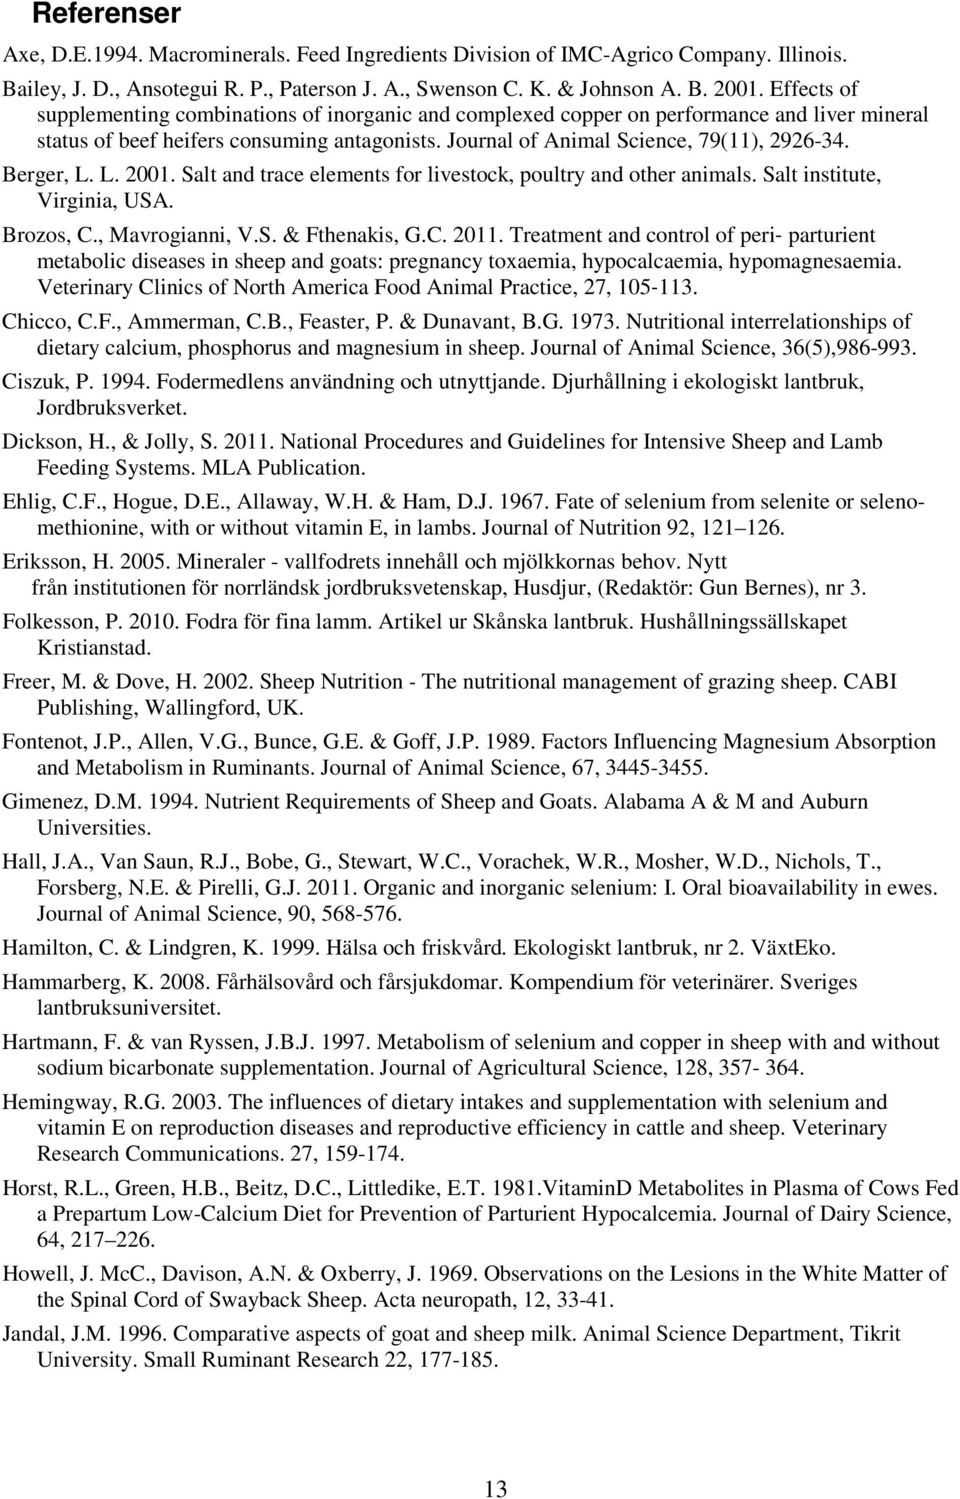 Berger, L. L. 2001. Salt and trace elements for livestock, poultry and other animals. Salt institute, Virginia, USA. Brozos, C., Mavrogianni, V.S. & Fthenakis, G.C. 2011.